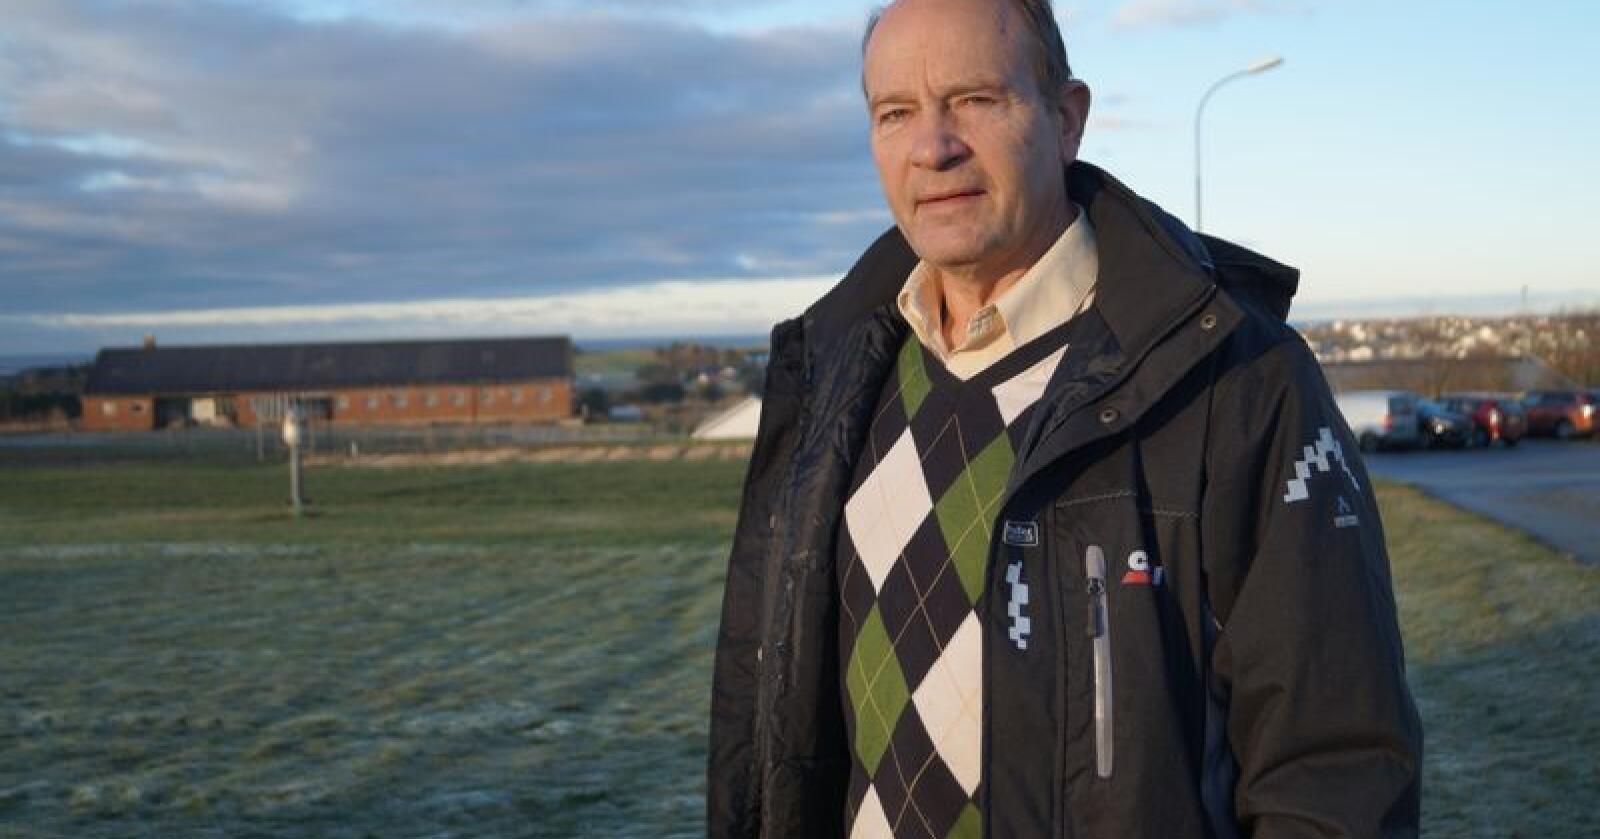 Leder Olaf Gjedrem i Jordvernforeningen i Rogaland. (Foto: Sjur Håland/ Bondevennen)